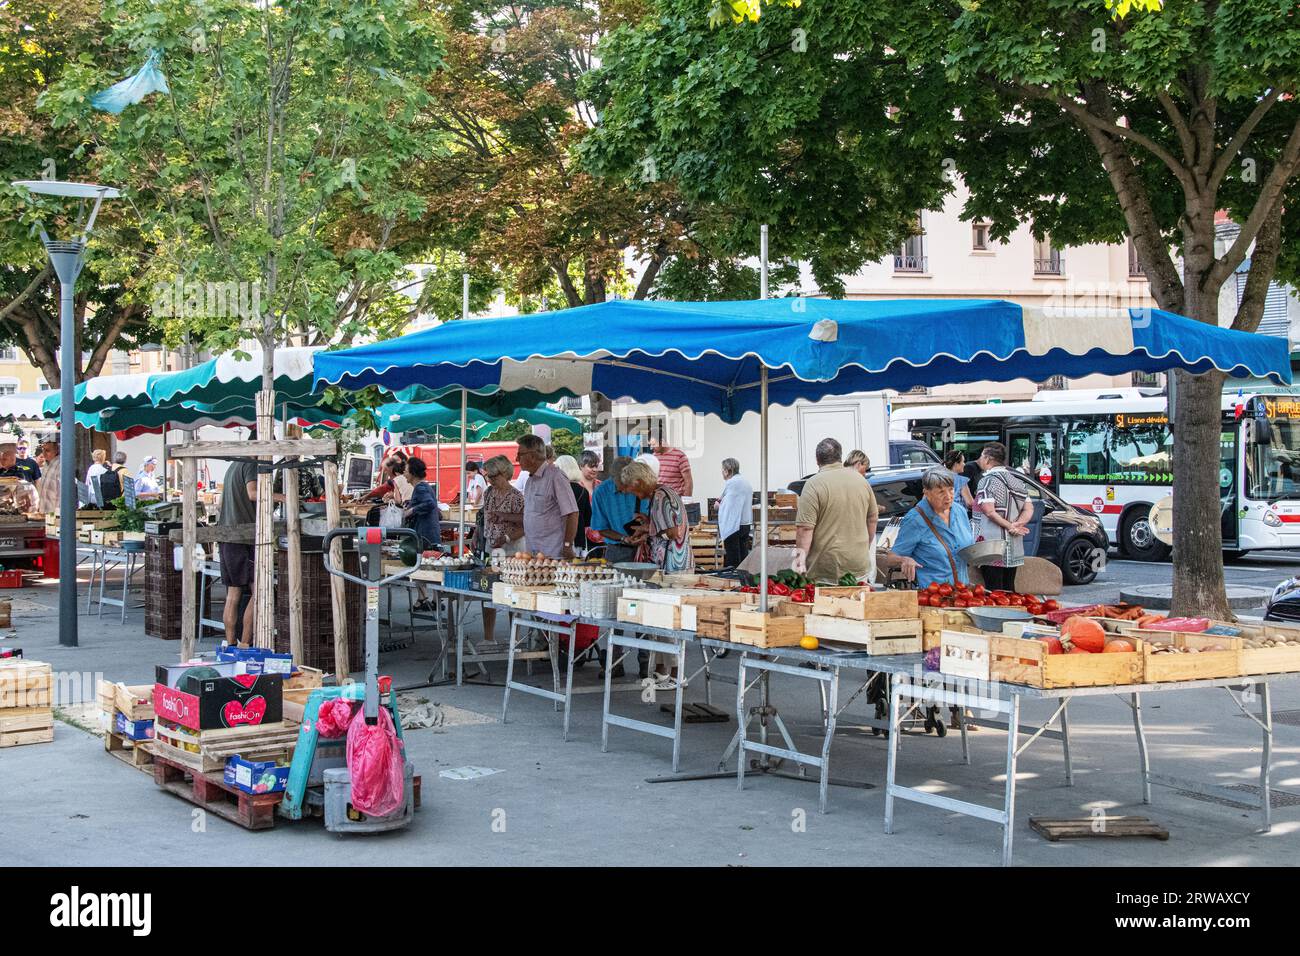 St. Antoine Market am Quai des Celestins in Lyon, Frankreich. Stockfoto